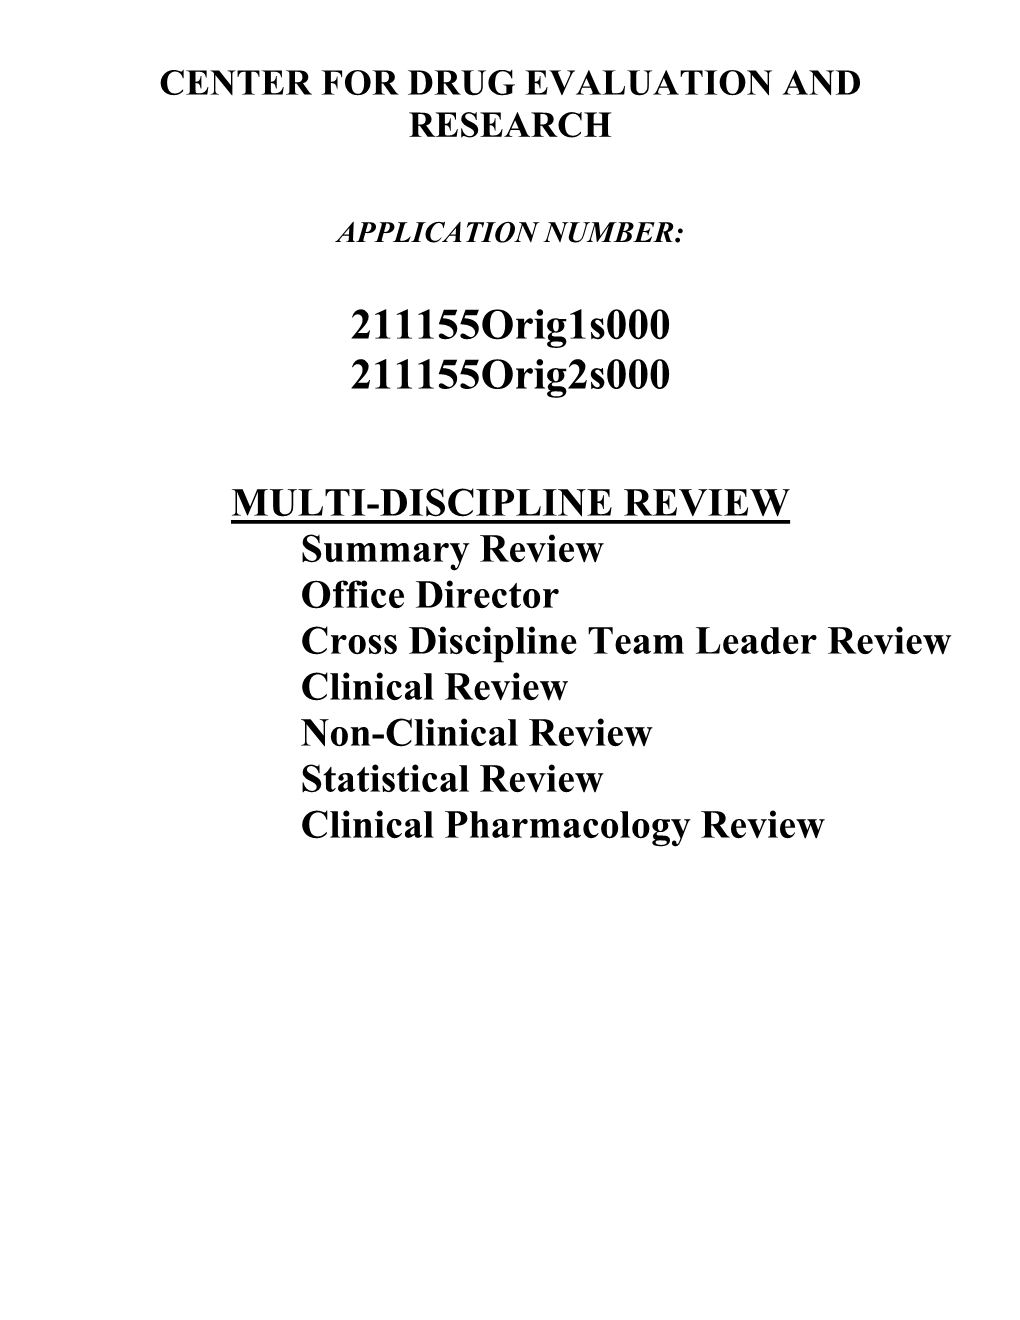 Multi-Discipline Review/Summary, Clinical, Non